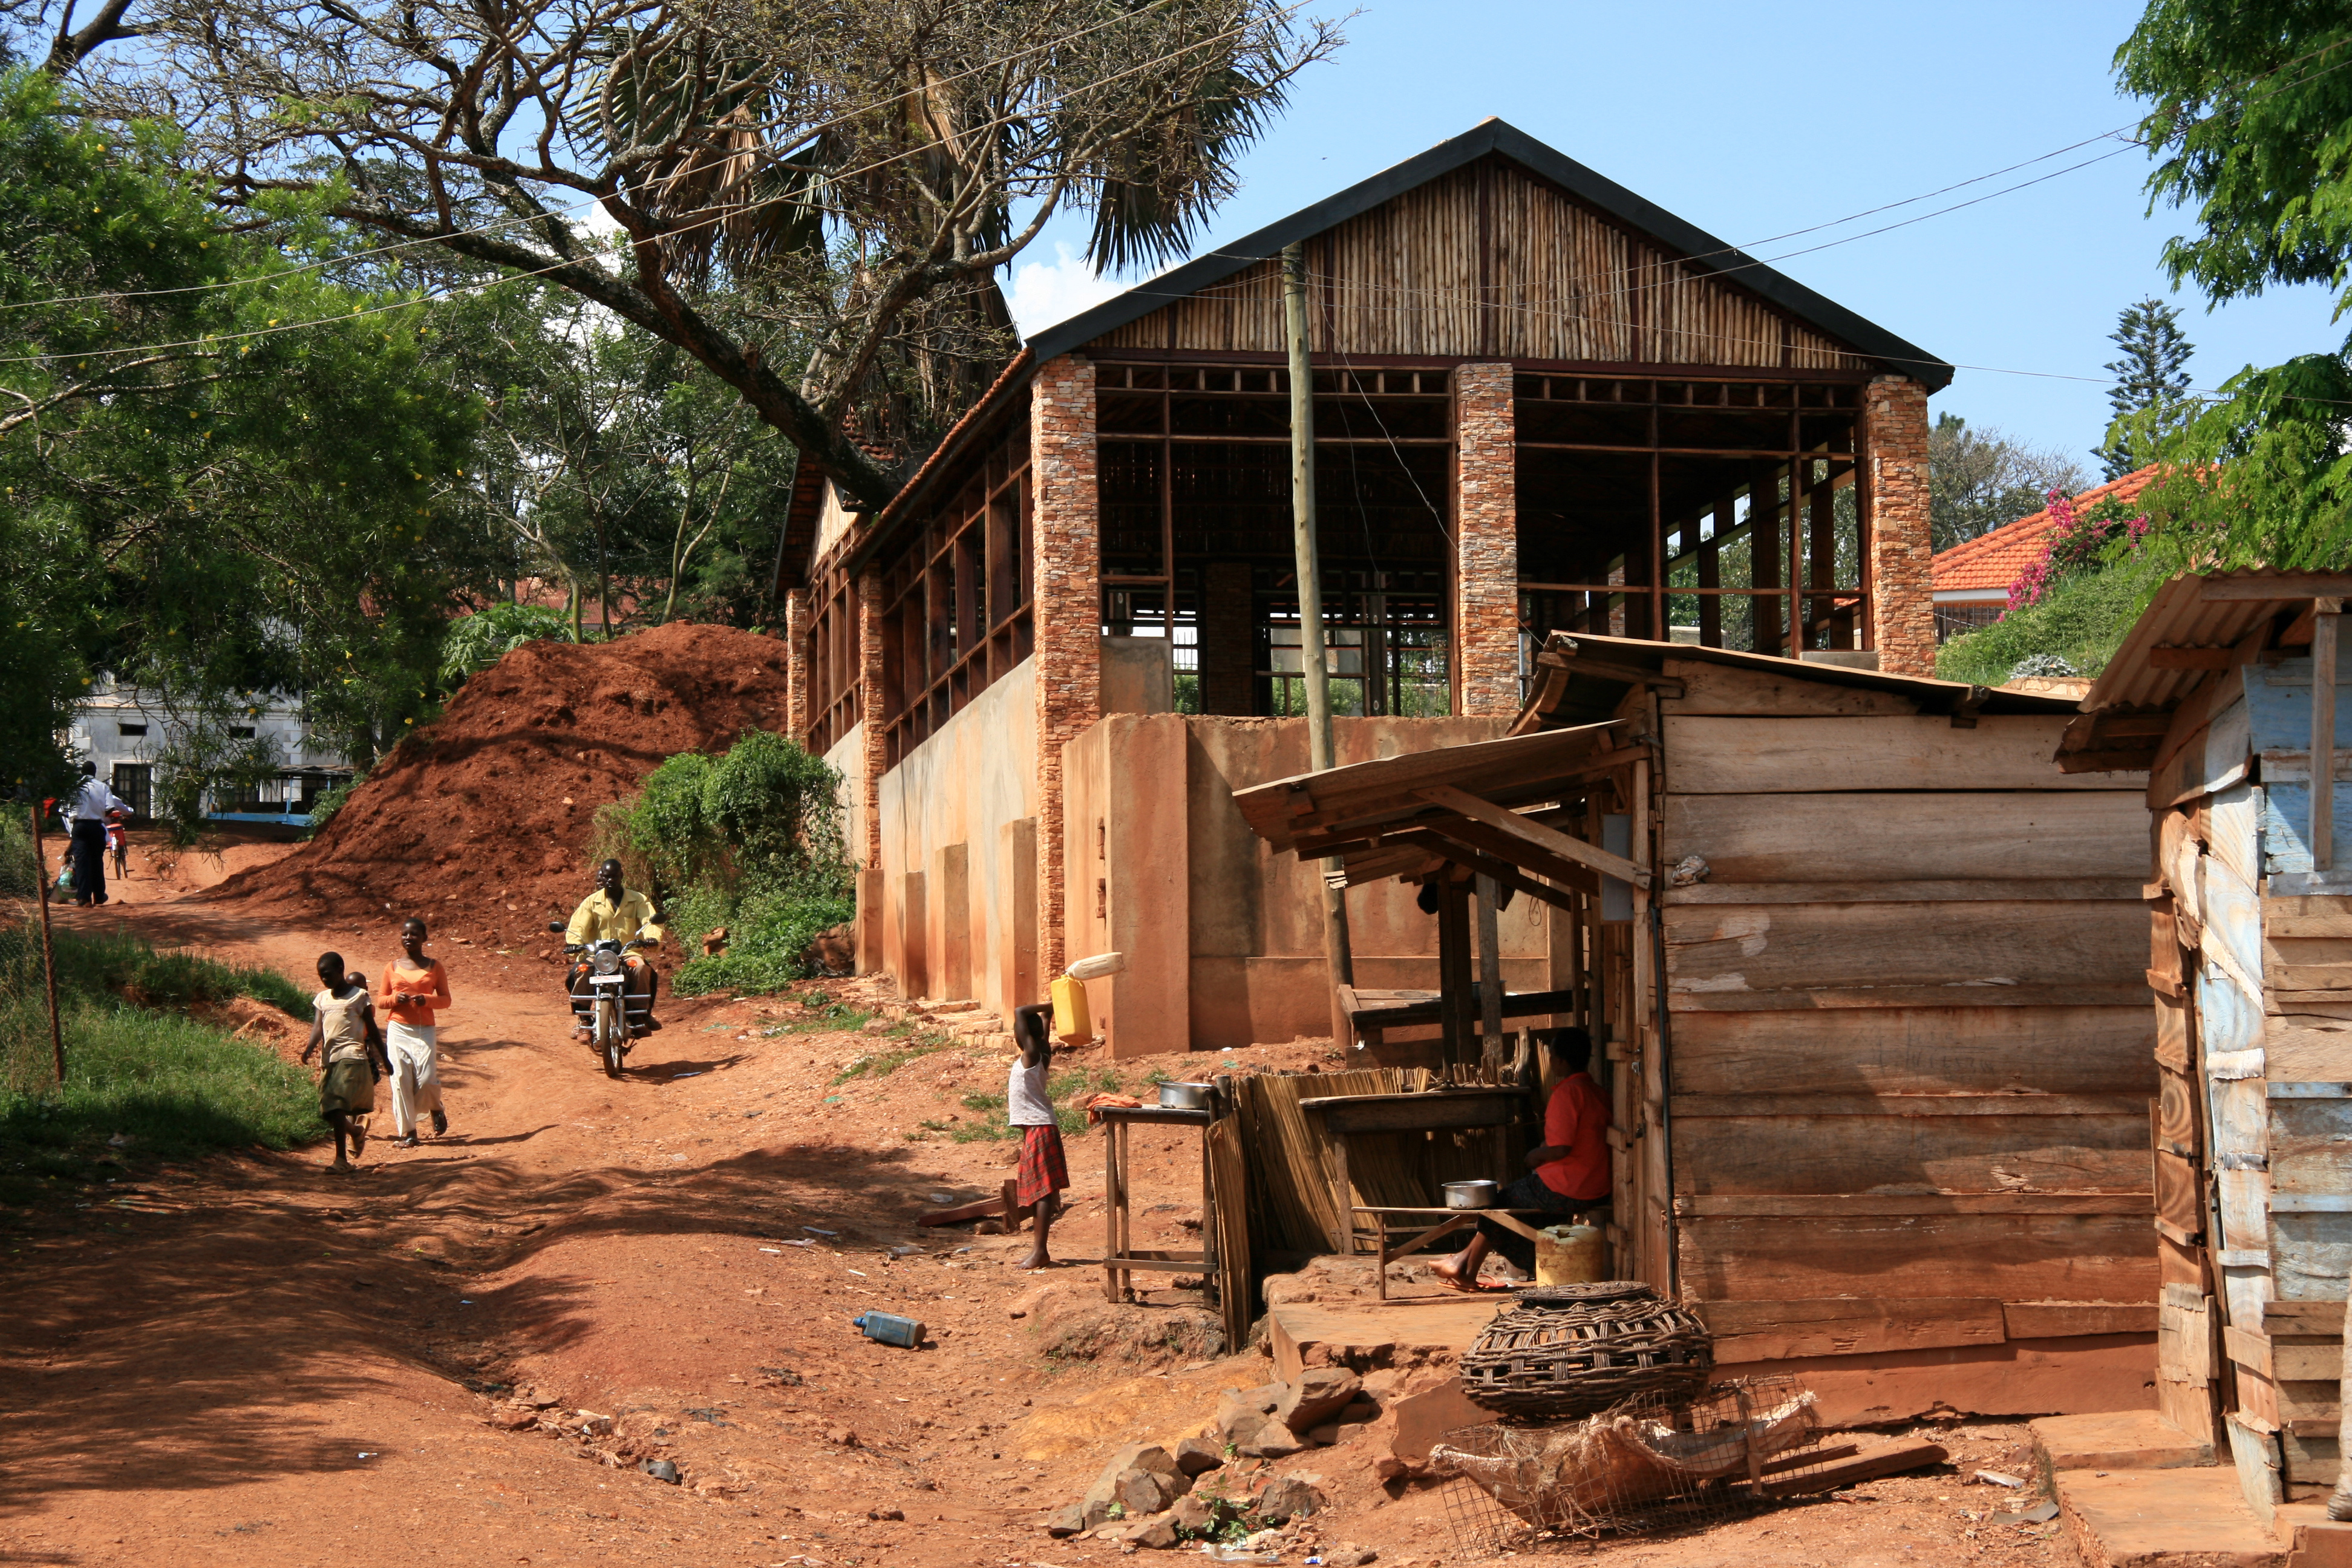 Shanty Town in Kampala, Uganda - The Pearl of Africa